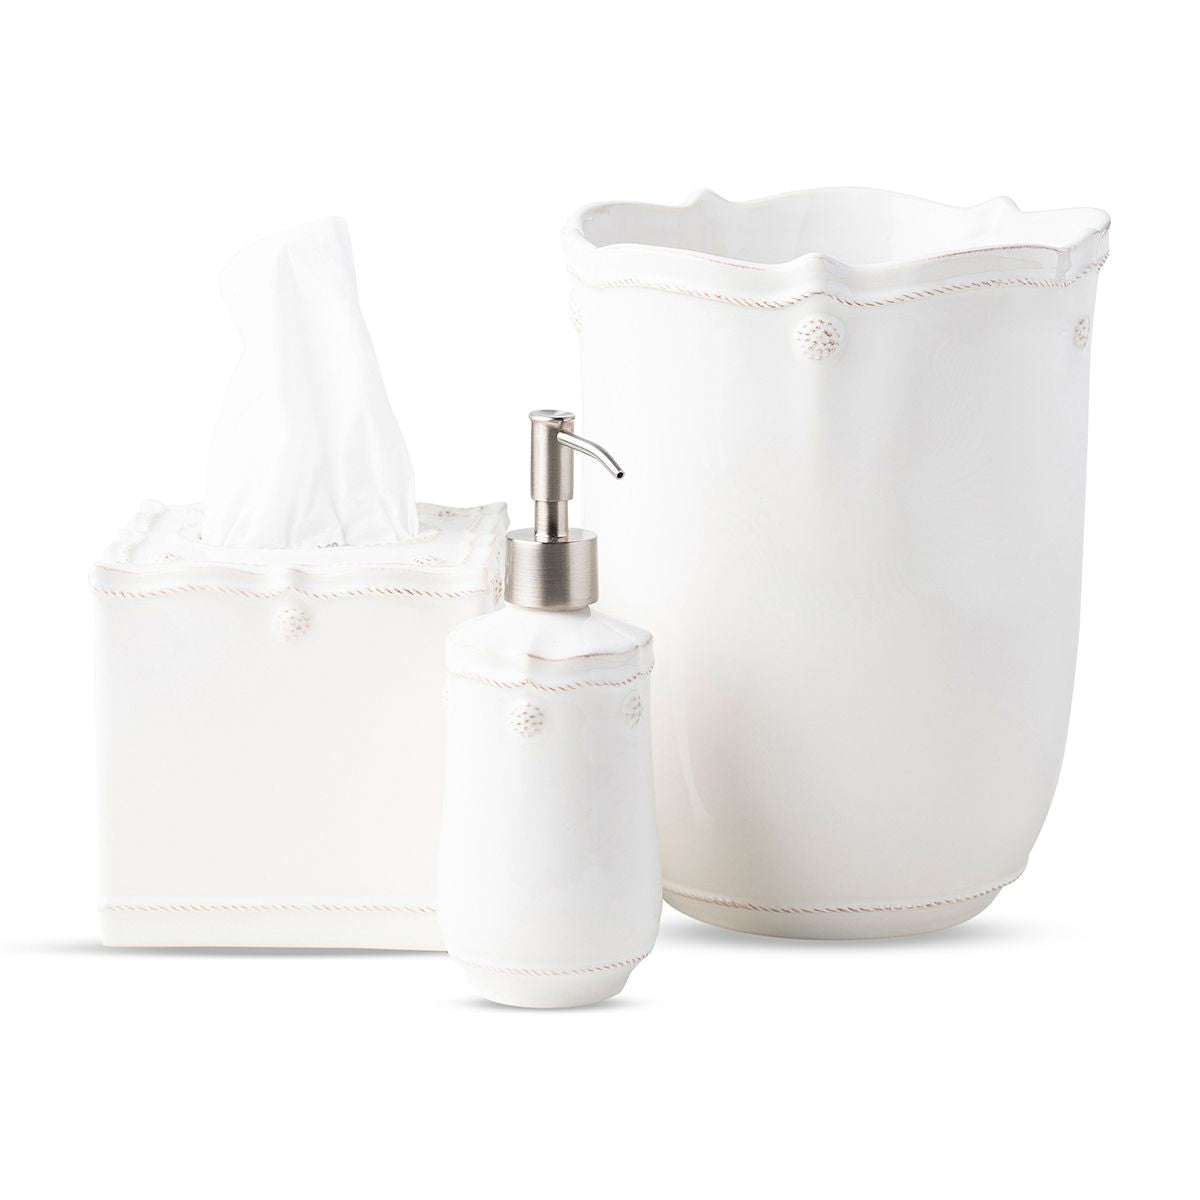 Berry & Thread Whitewash 
3pc Bath Essentials Set 
Soap/Lotion Dispenser, Tissue Box Cover, & Wastebasket